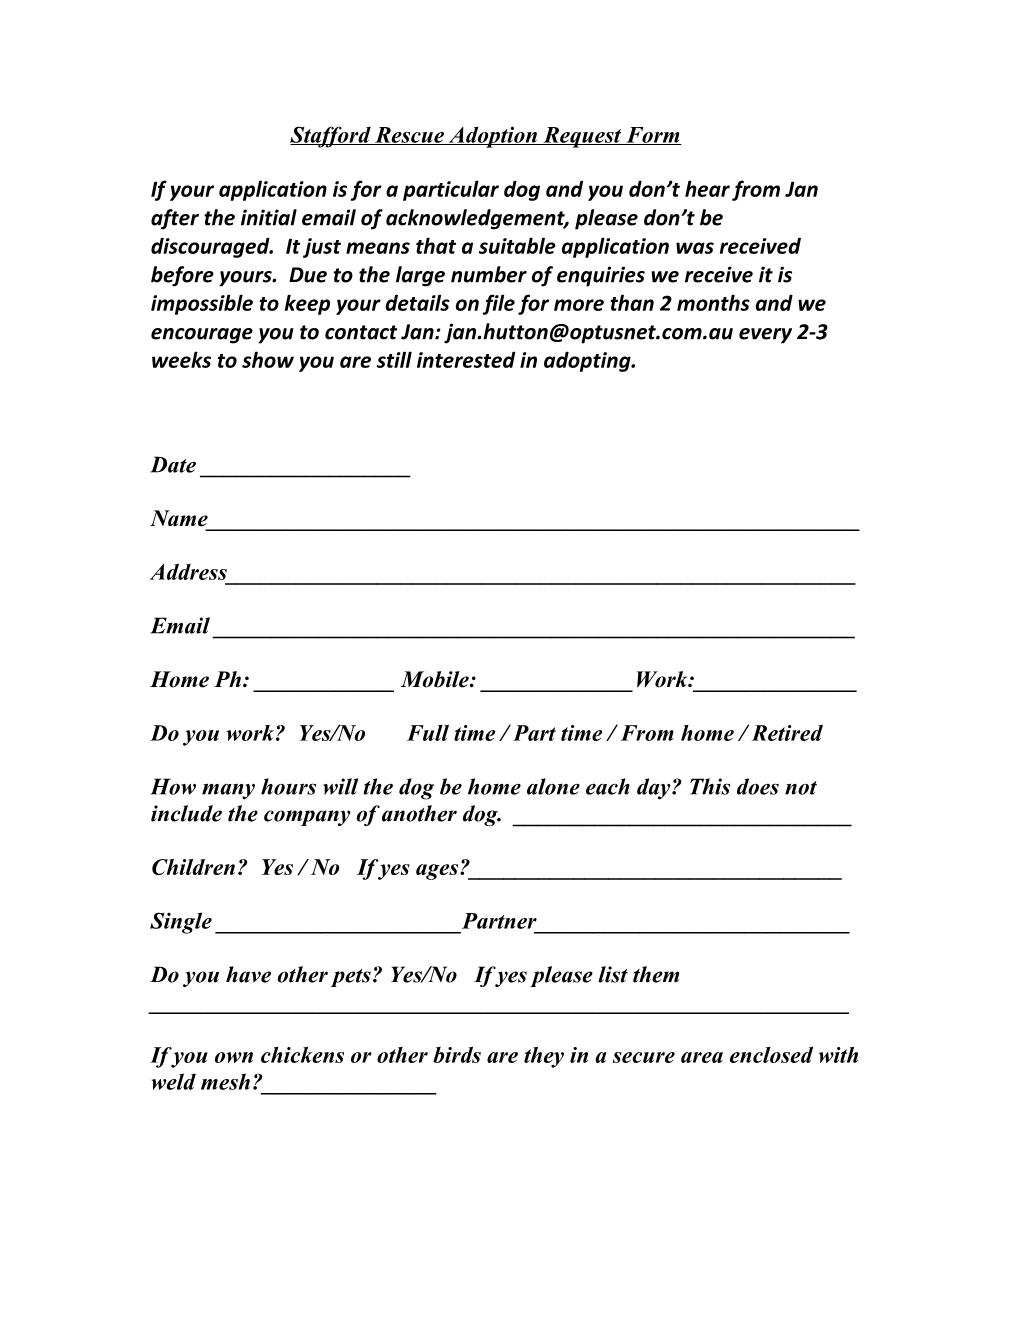 Stafford Rescue Adoption Request Form